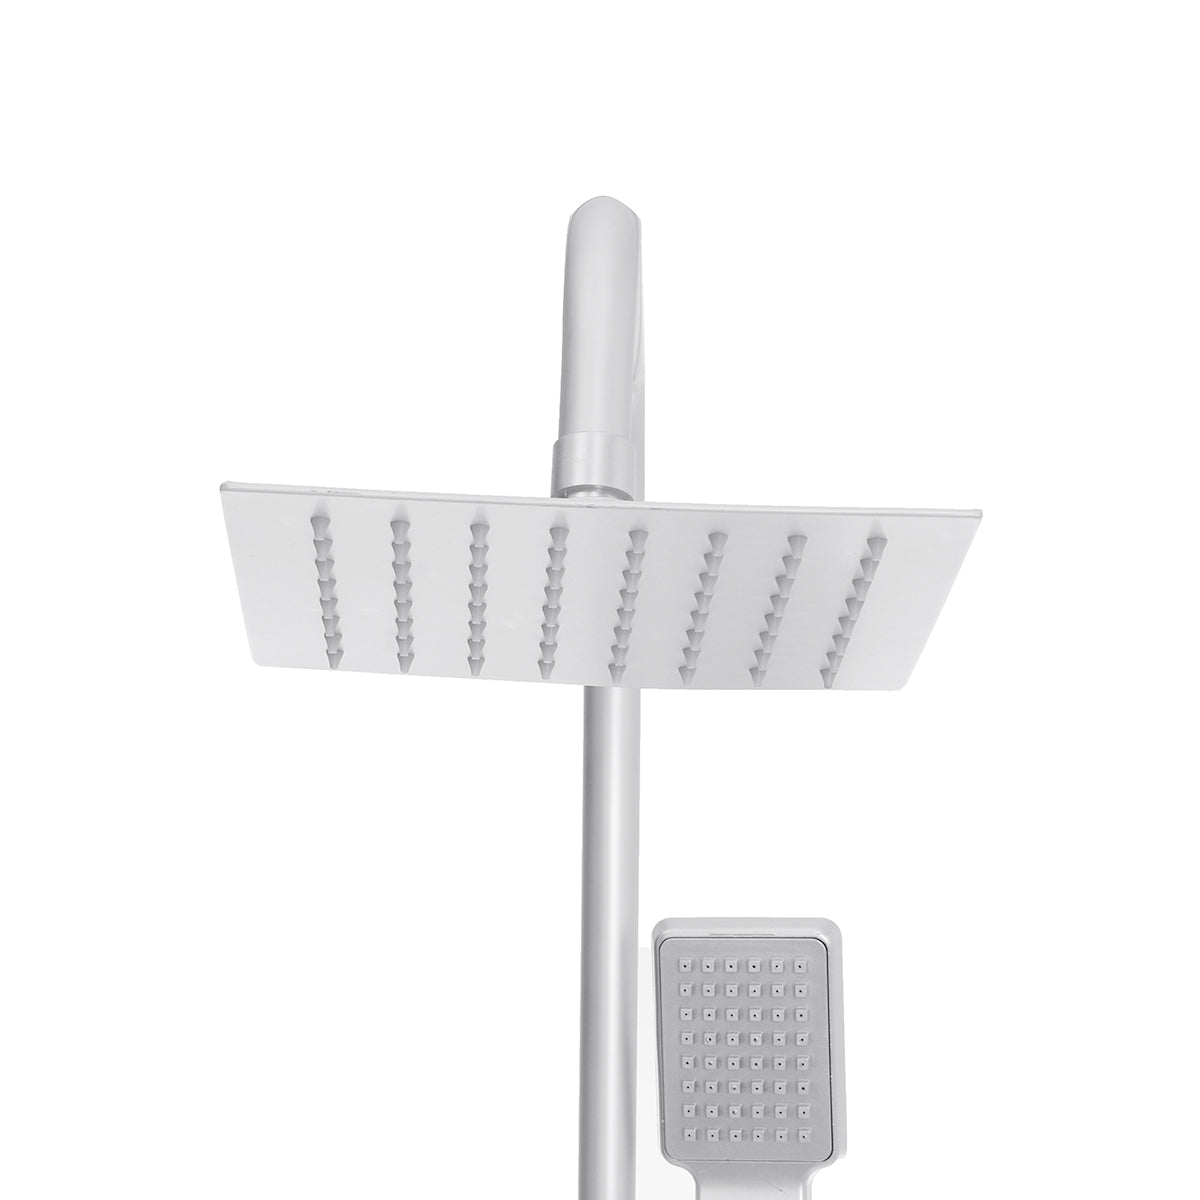 3-Way Wall Mounted Rainfall Shower Head Set Faucet System Handheld Sprayer Hose